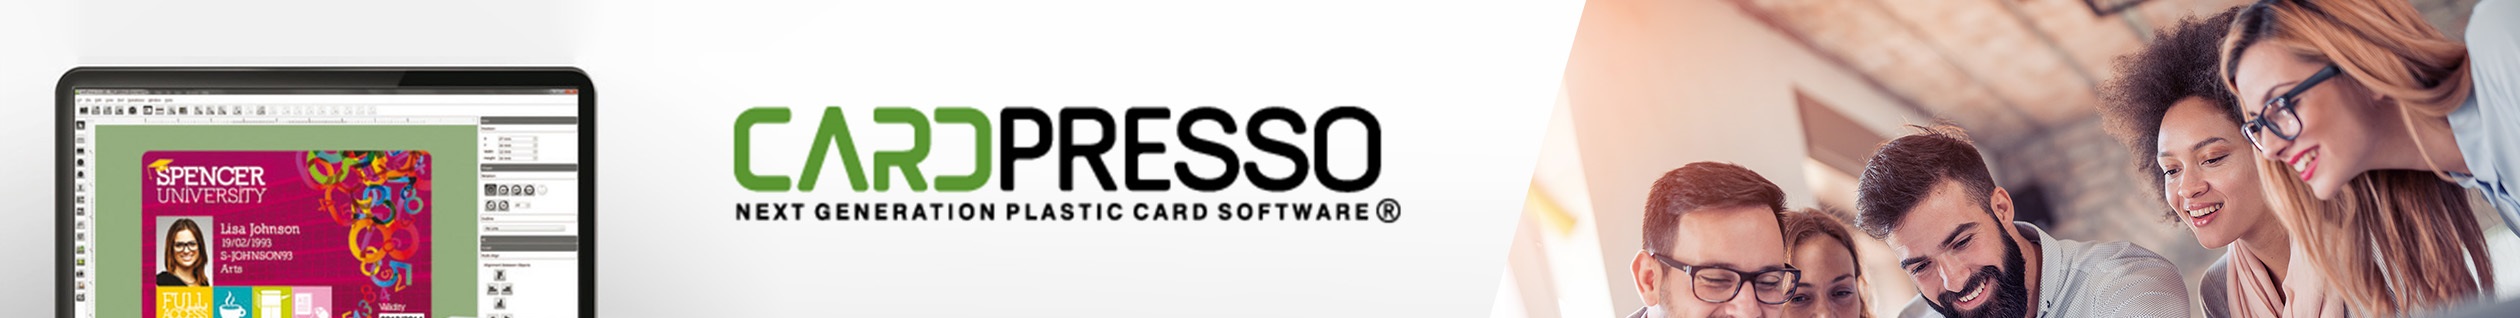 Cardpresso Software